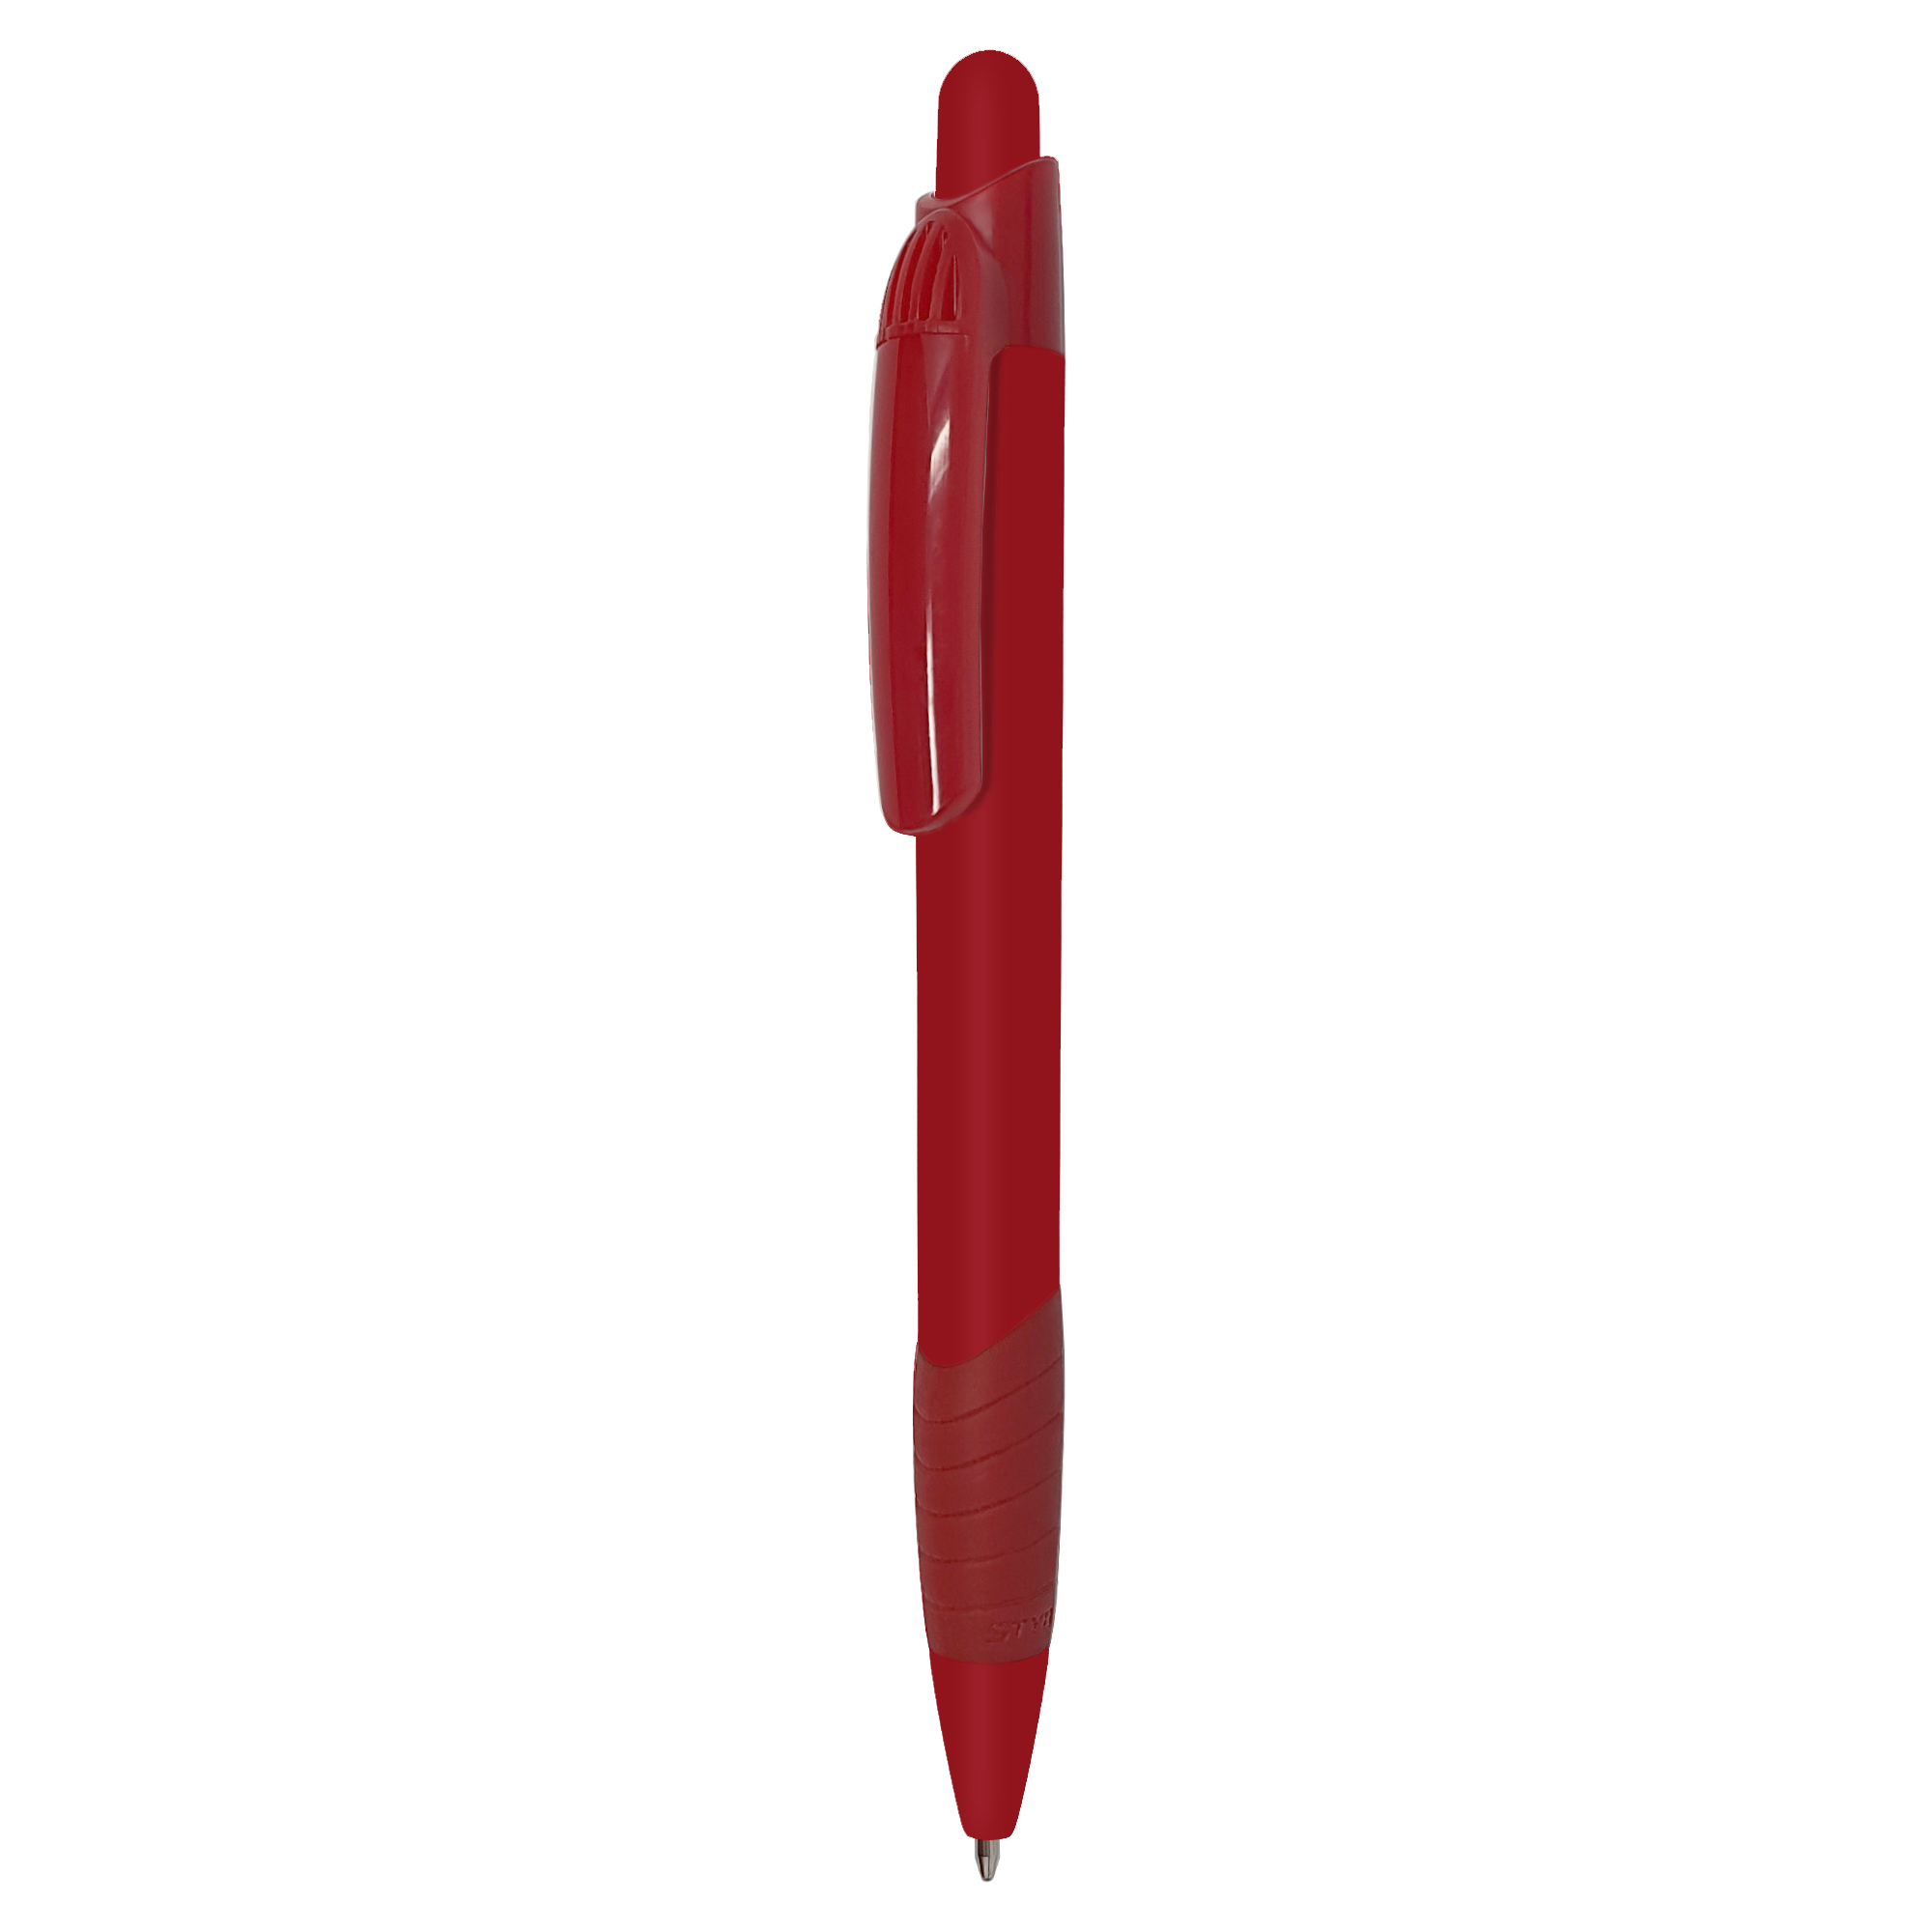 Bolígrafo Sydney
Color rojo completo